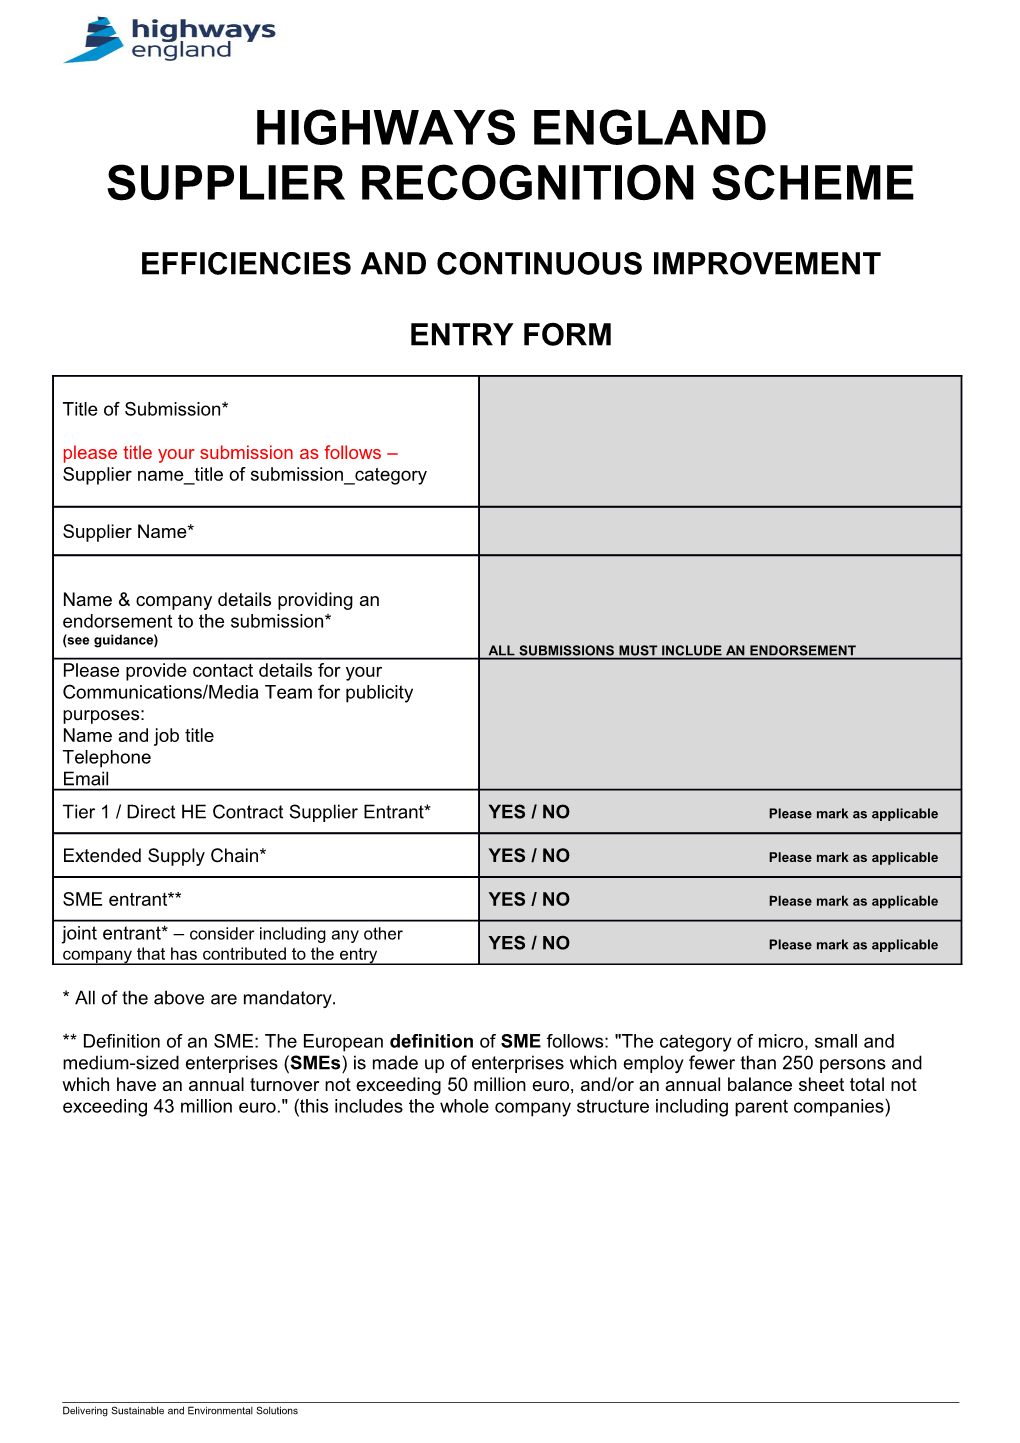 Efficiencies and Continuous Improvement